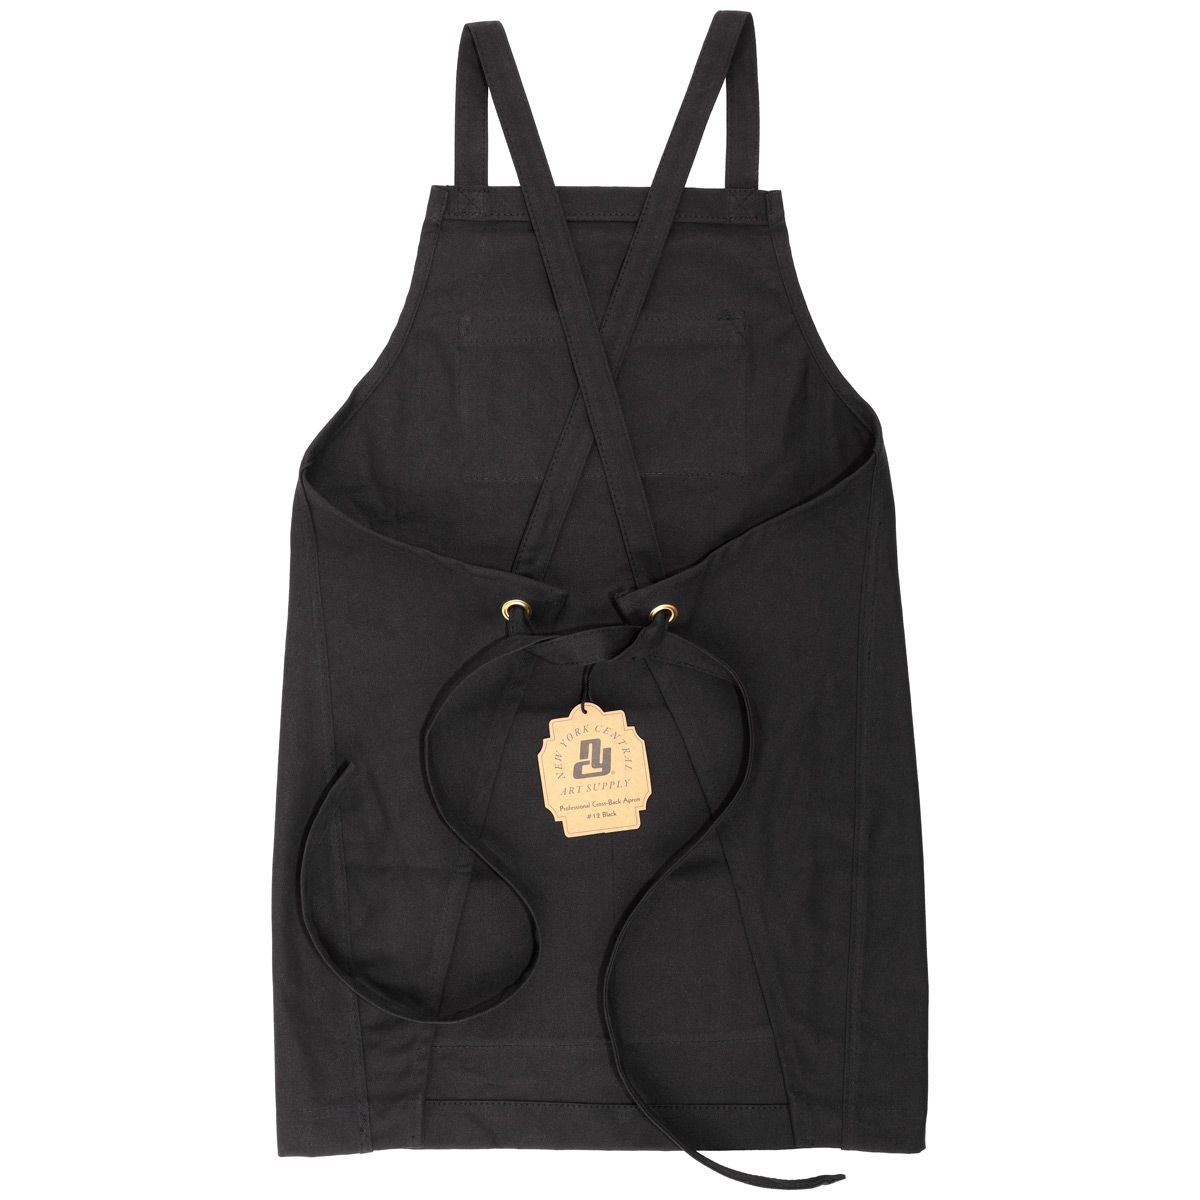 Adjustable straps help customize apron length for wearer